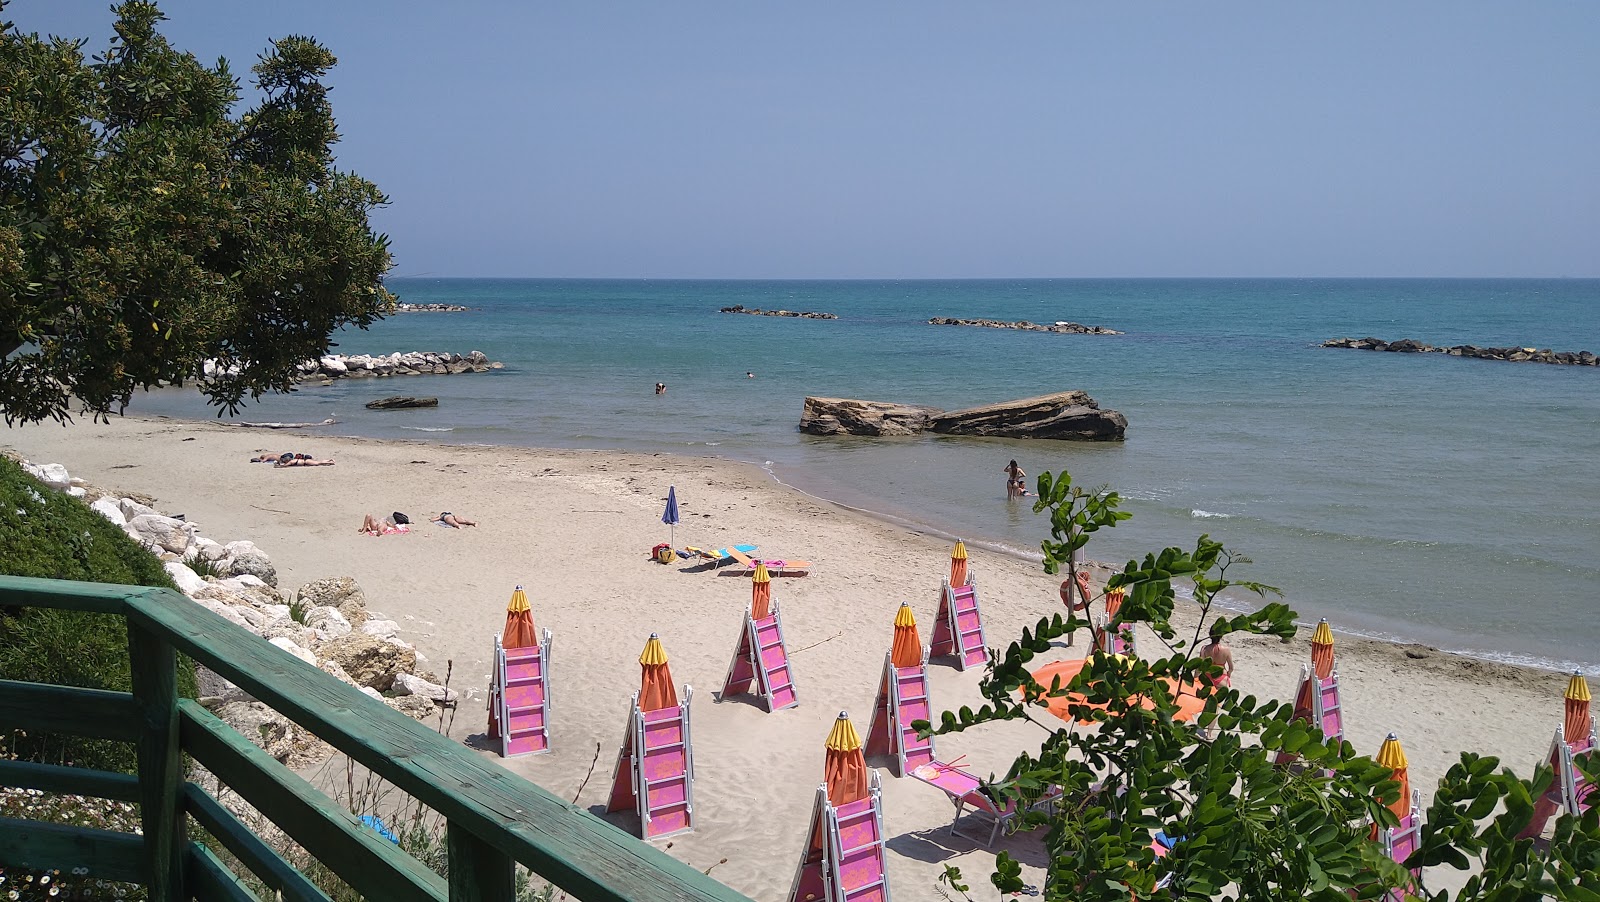 Photo of Spiaggia di Cavalluccio with turquoise pure water surface